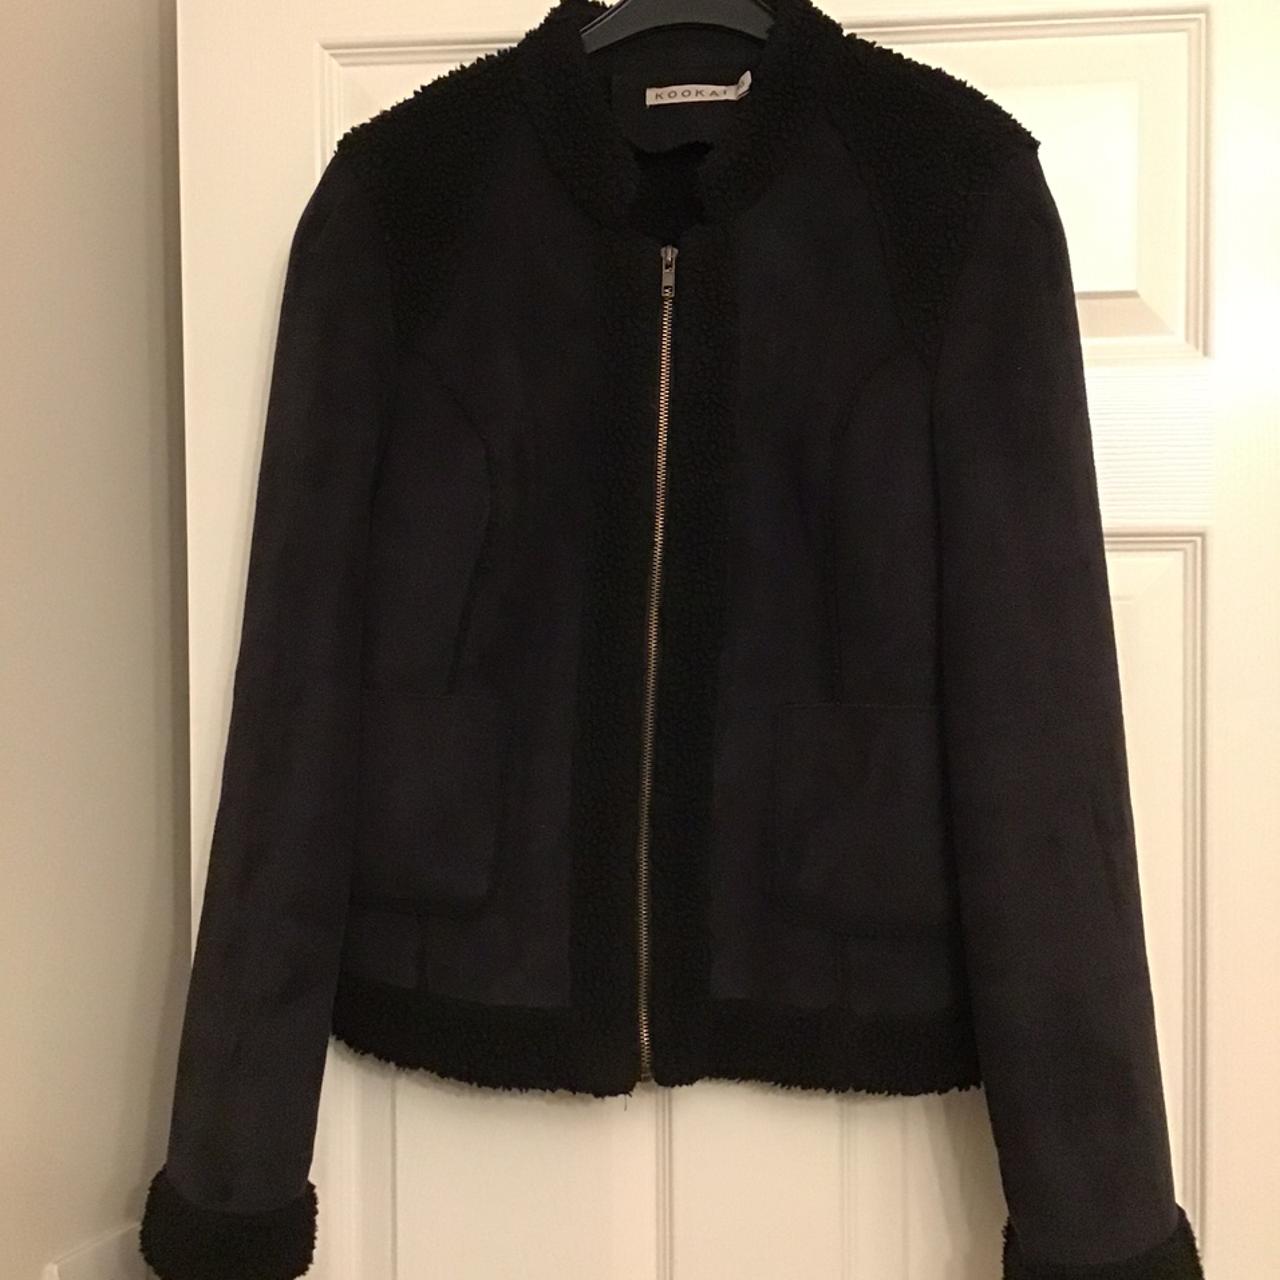 Black faux suede & wool bomber jacket from Kookai... - Depop